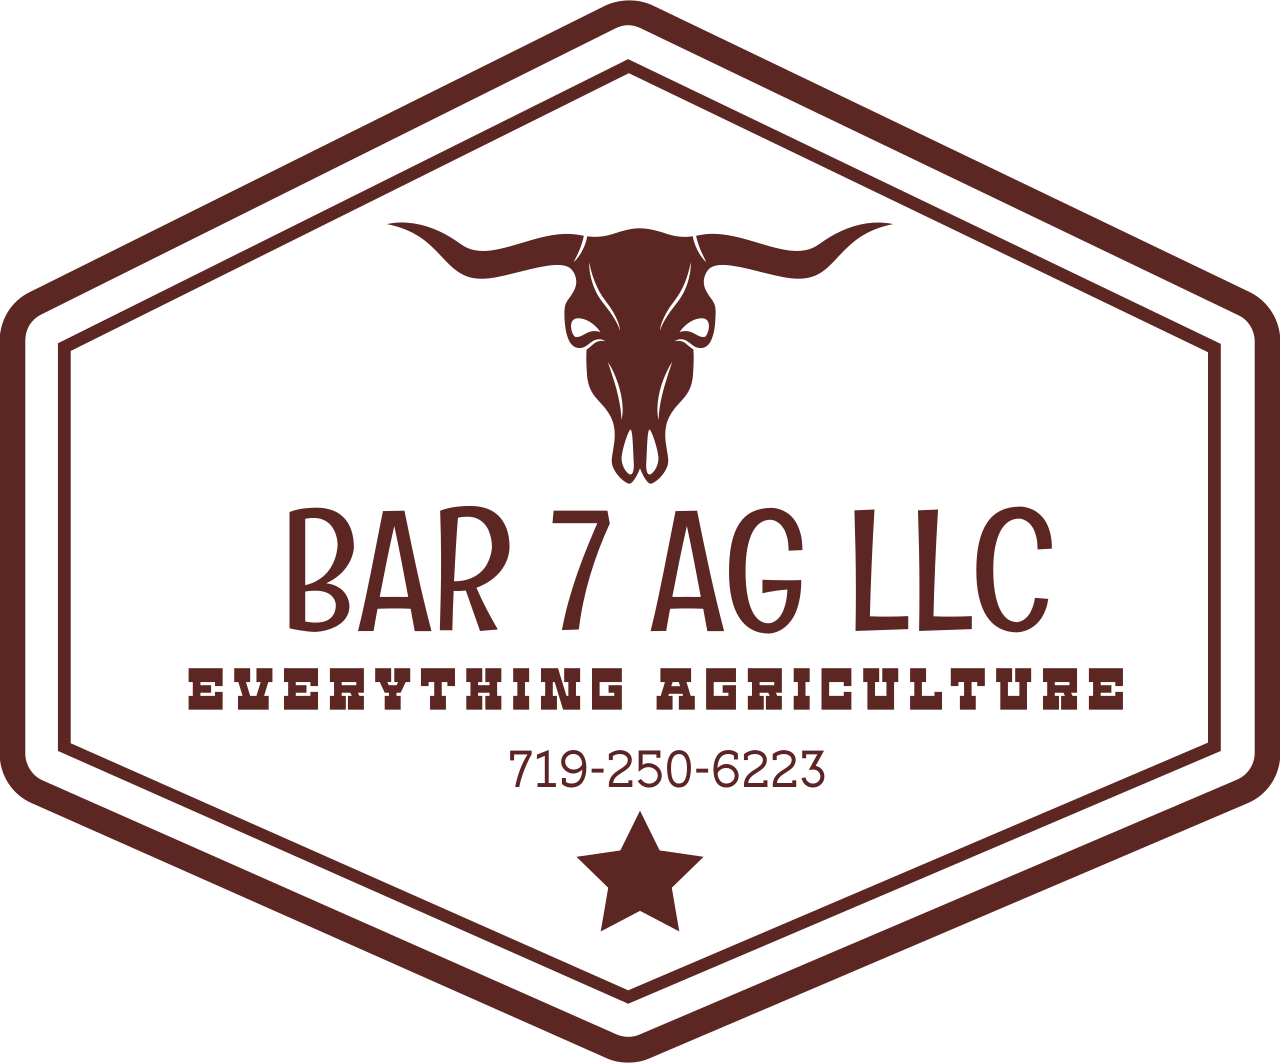 Bar 7 Ag LLC's logo